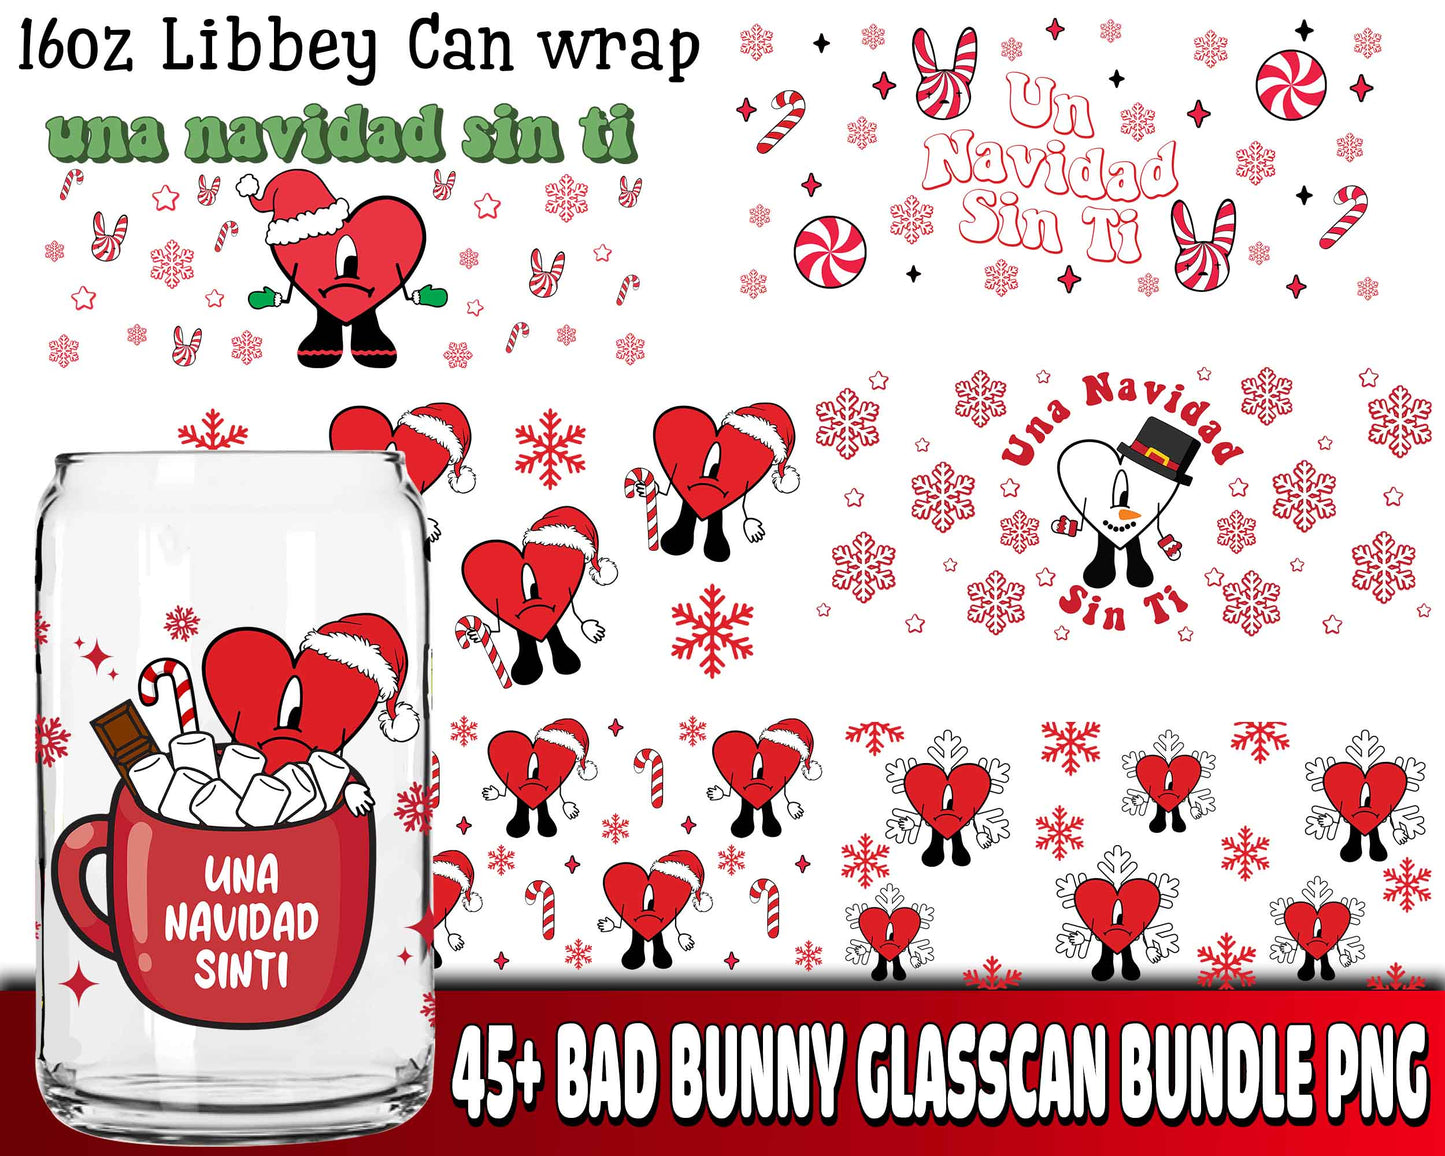 45+ file Bad bunny glasscan bundle PNG  , Cutting Image, cricut , file cut , digital download ,Instant Download